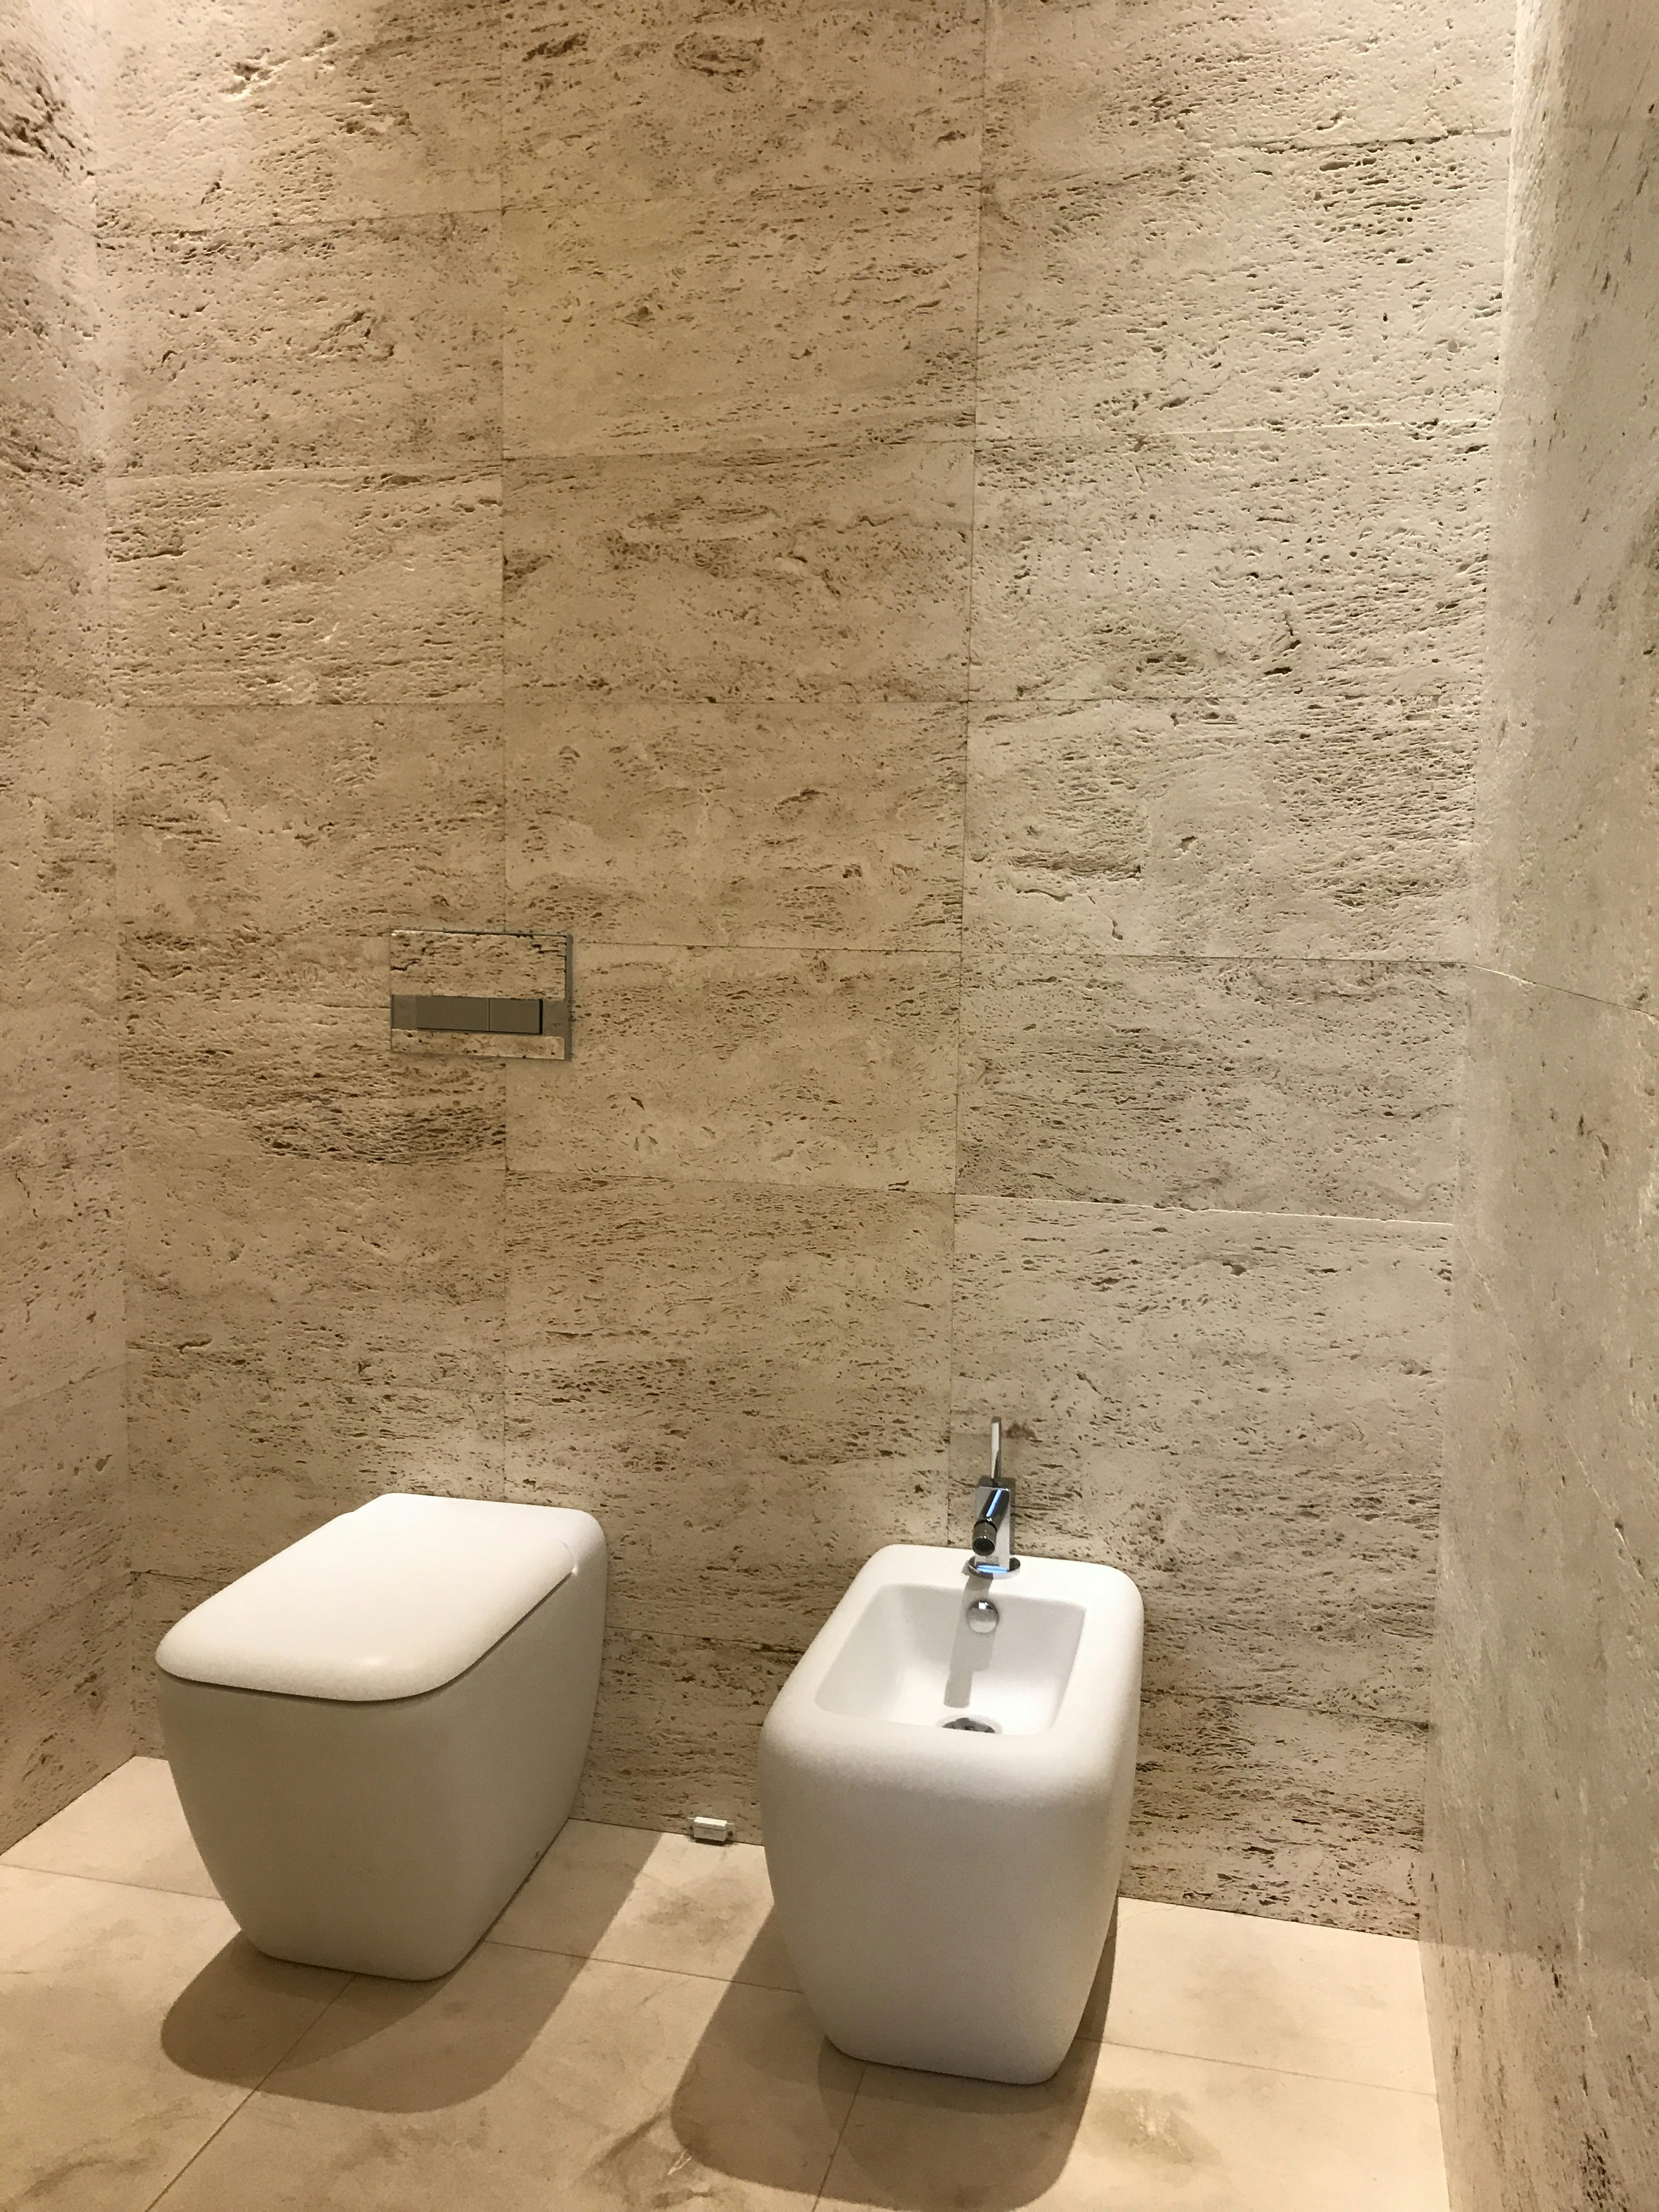 bidet with water heater in modern bathroom